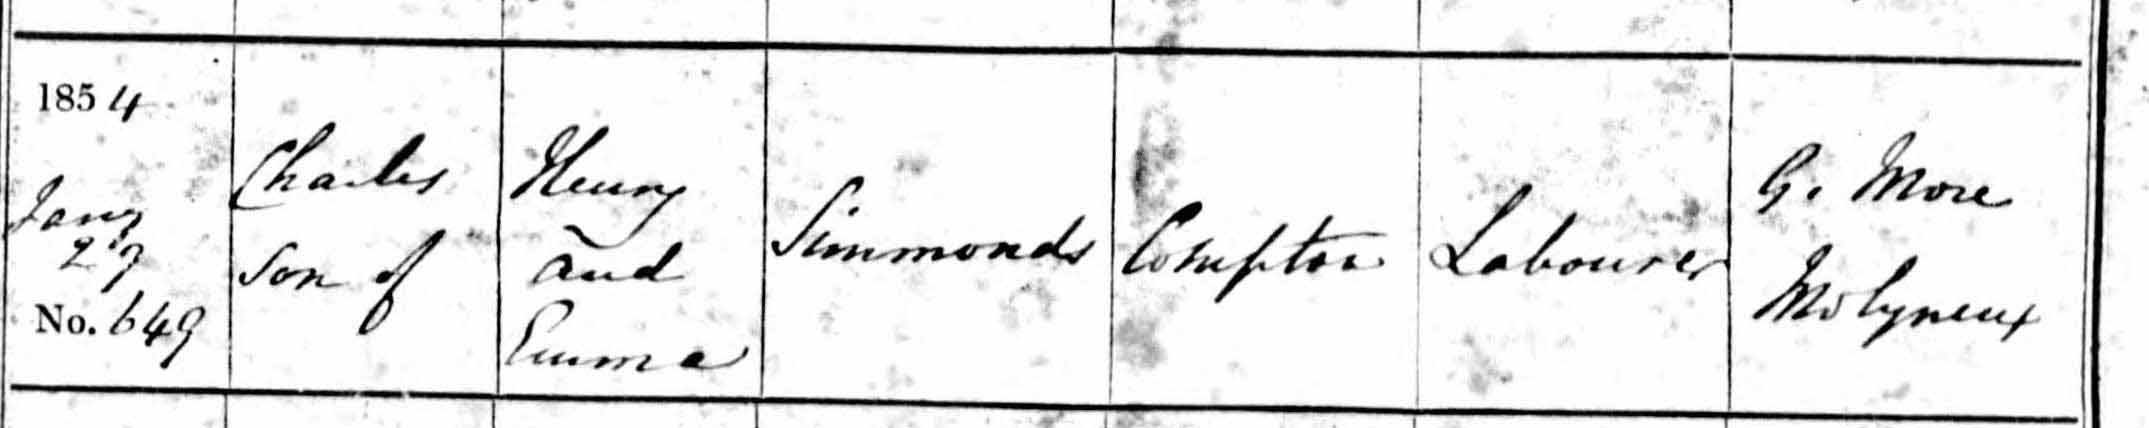 Charles Simmonds 1854 baptism